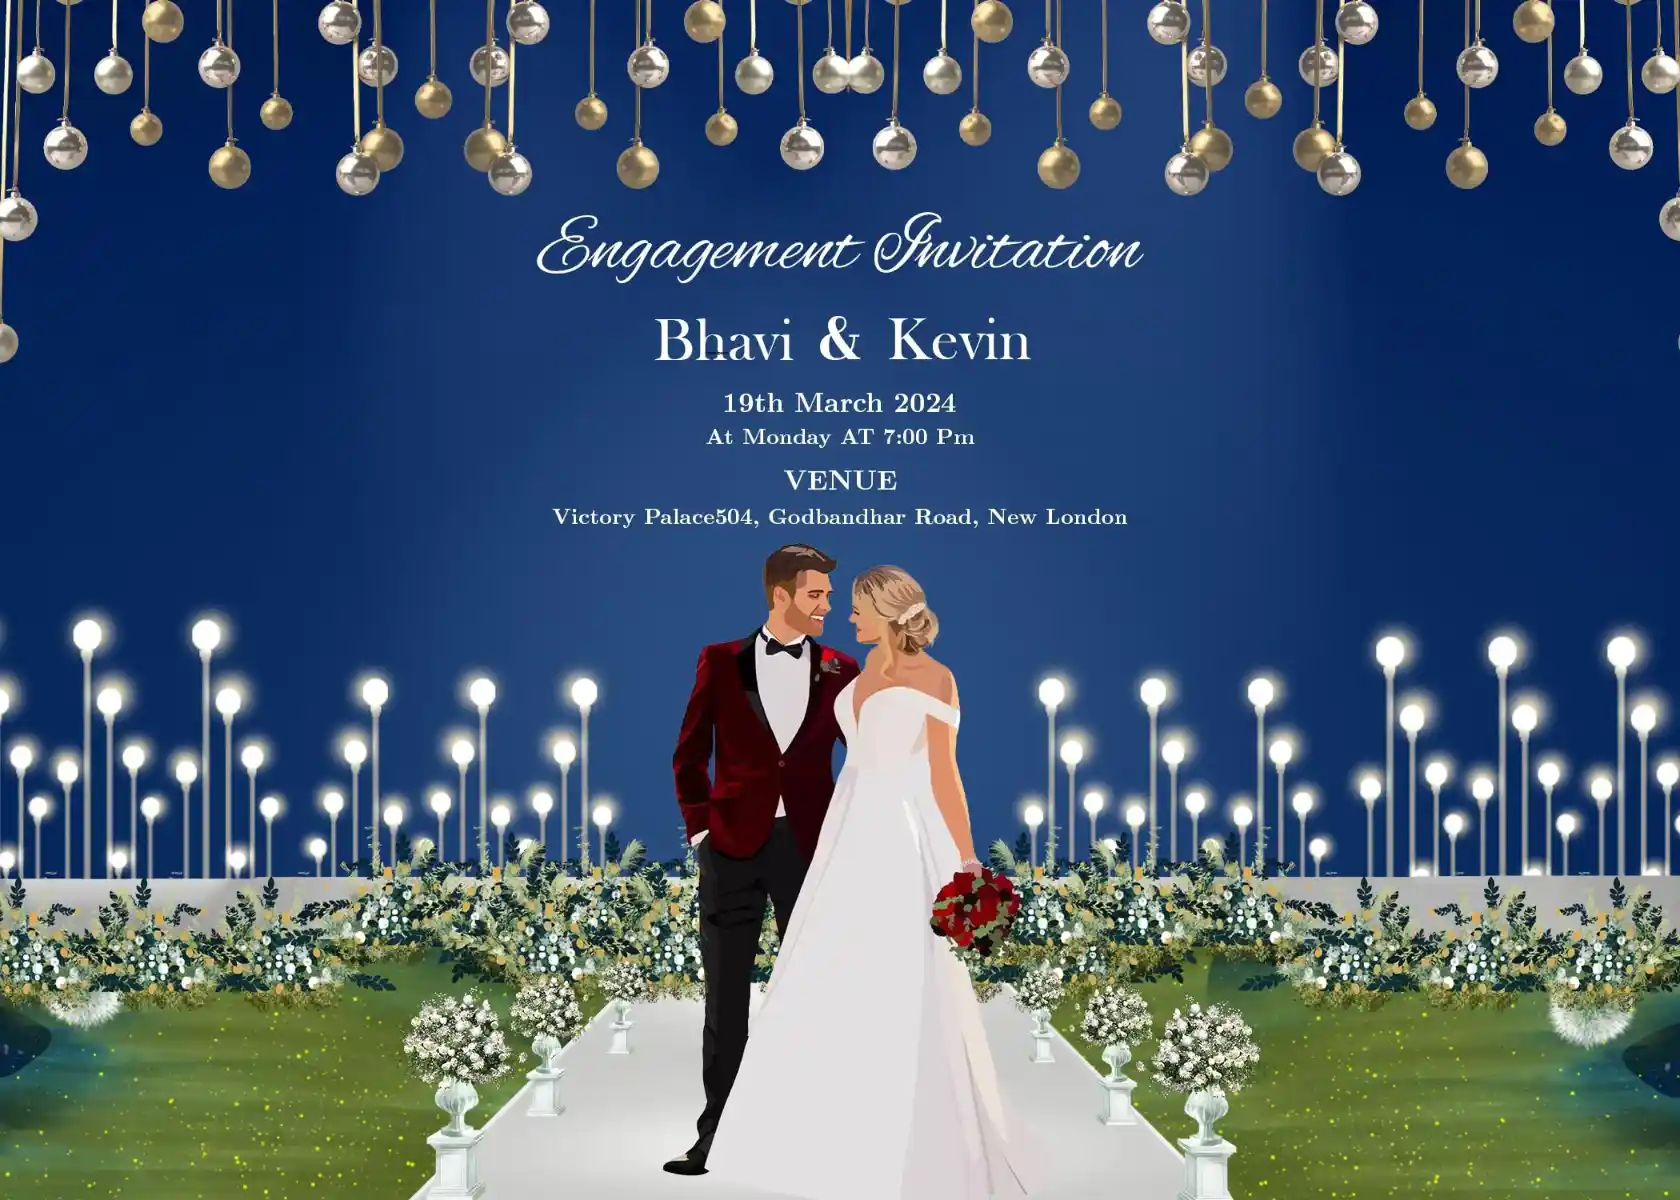 Invitation of Engagement